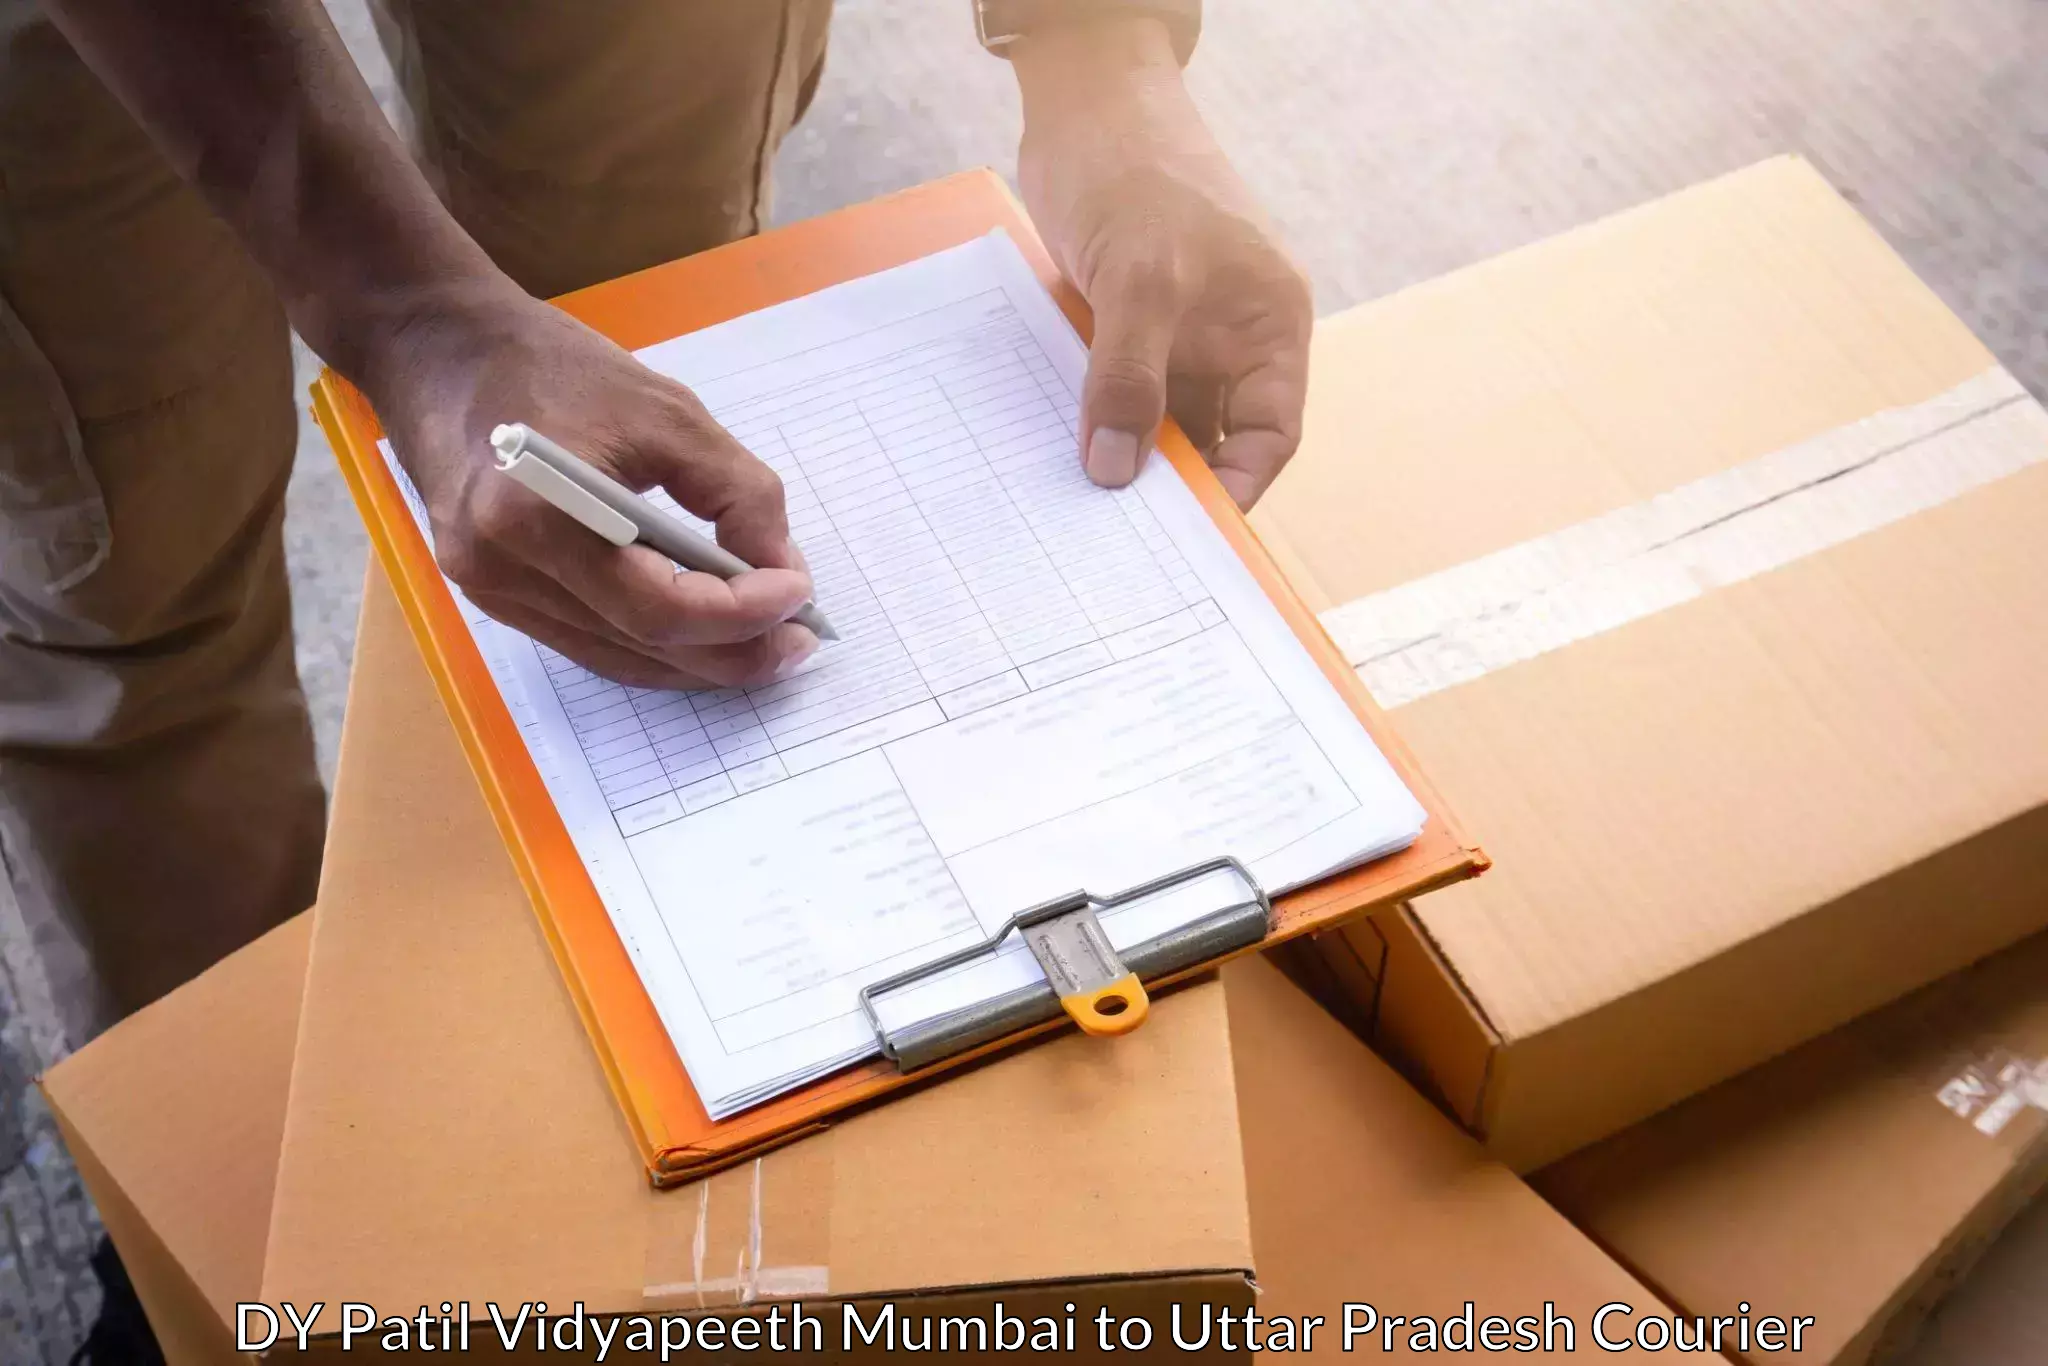 Express package handling DY Patil Vidyapeeth Mumbai to Uttar Pradesh